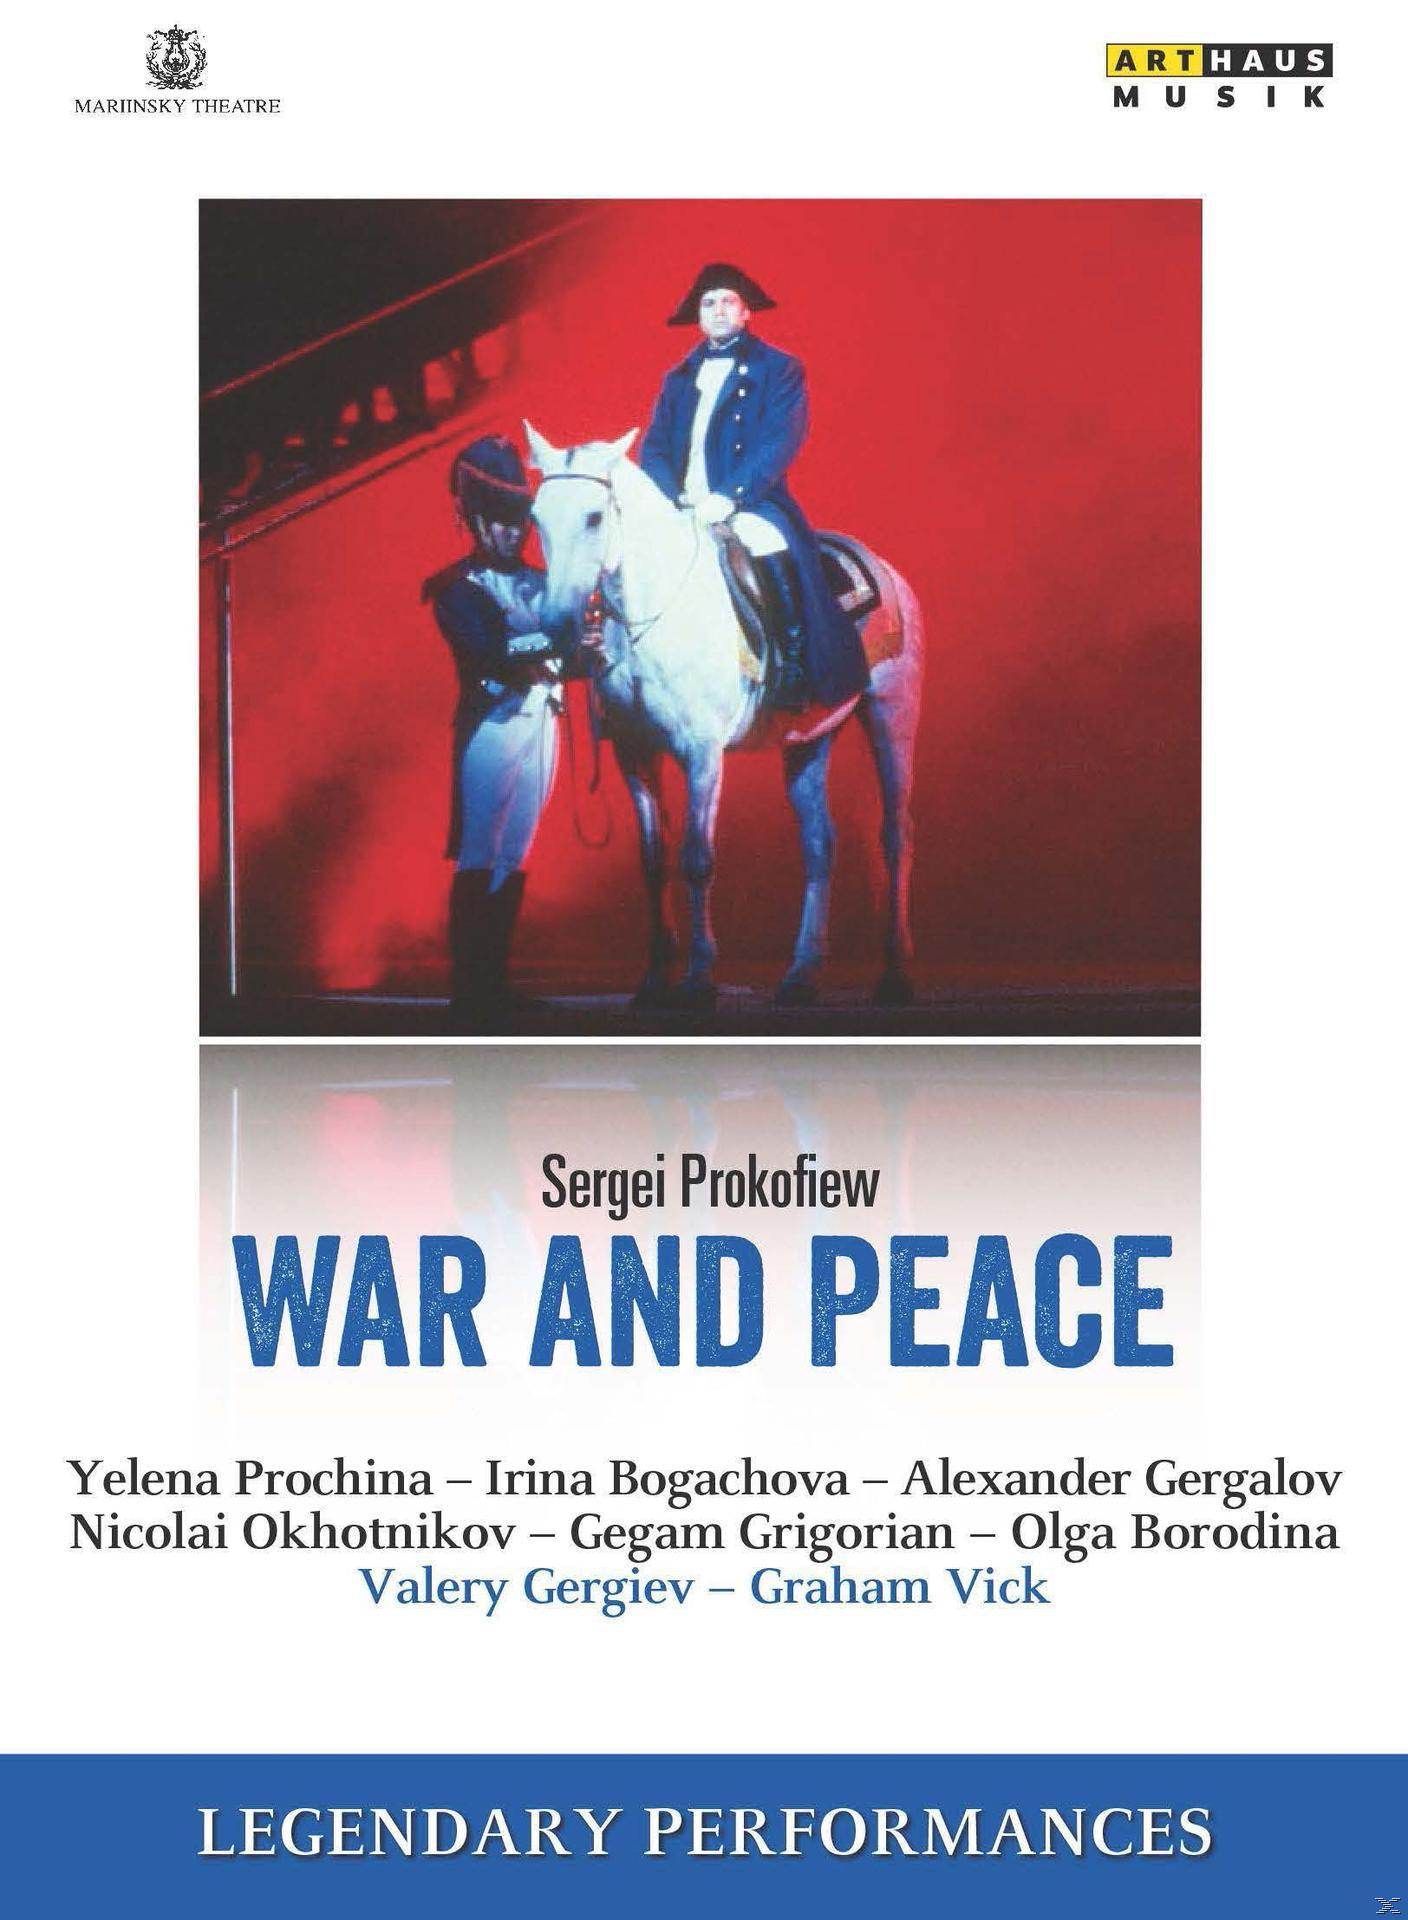 Kirov Orchestra - (DVD) - Gegam Elena Vassily Borodina, Grigorian, Und Gergalov, Krieg Frieden Olga Alexander Gerelo, Prokina,